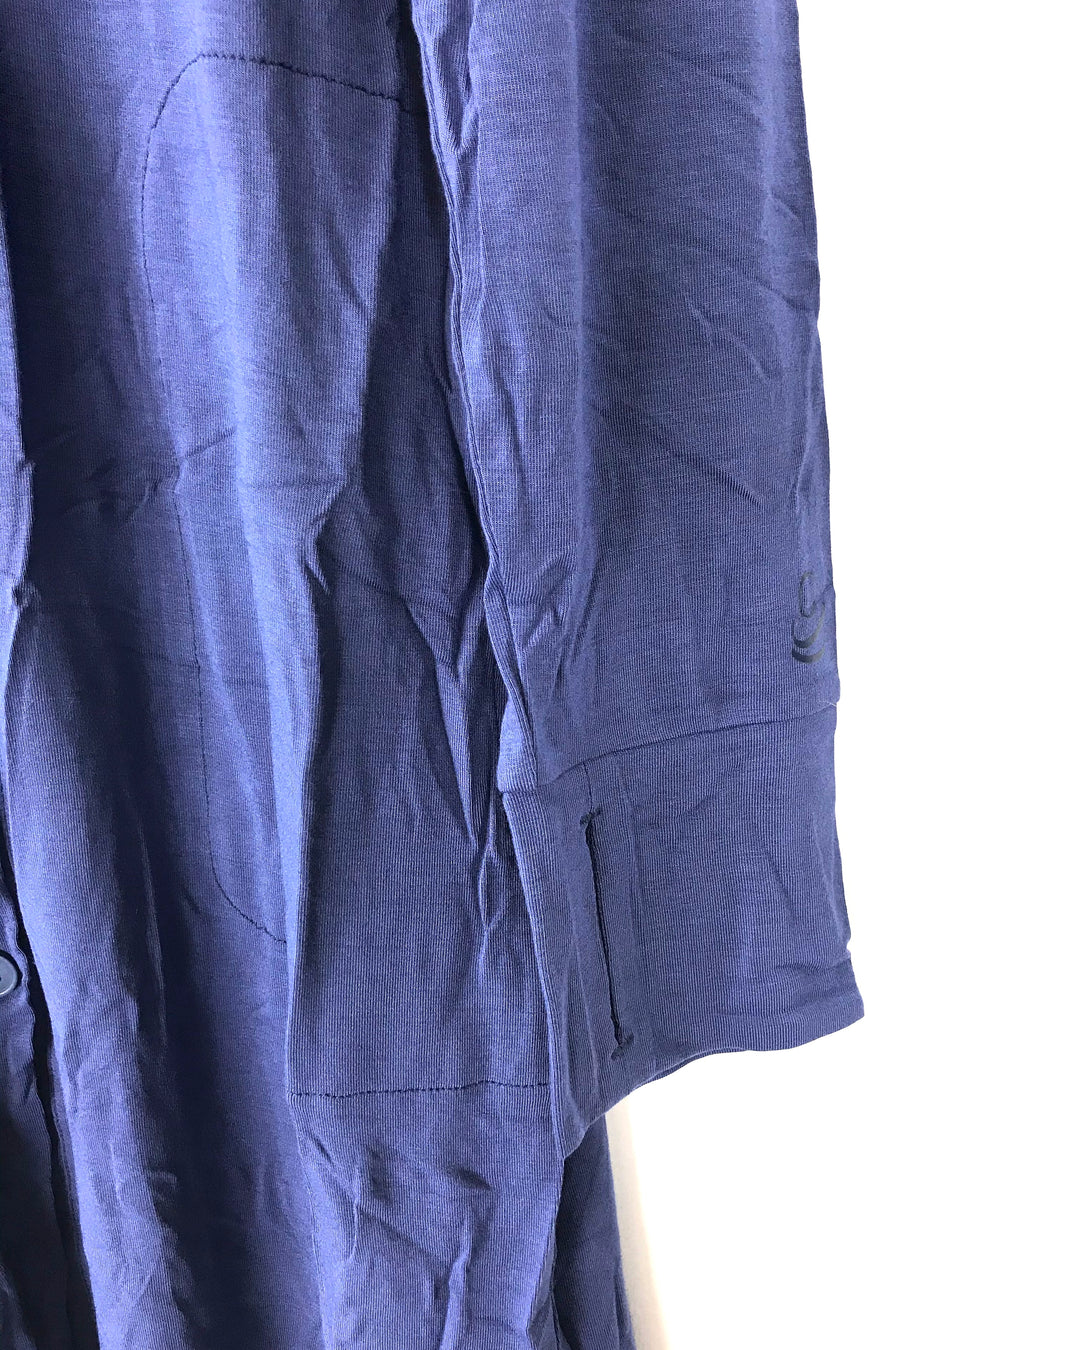 Navy Long Sleeve Cardigan - Size 6/8